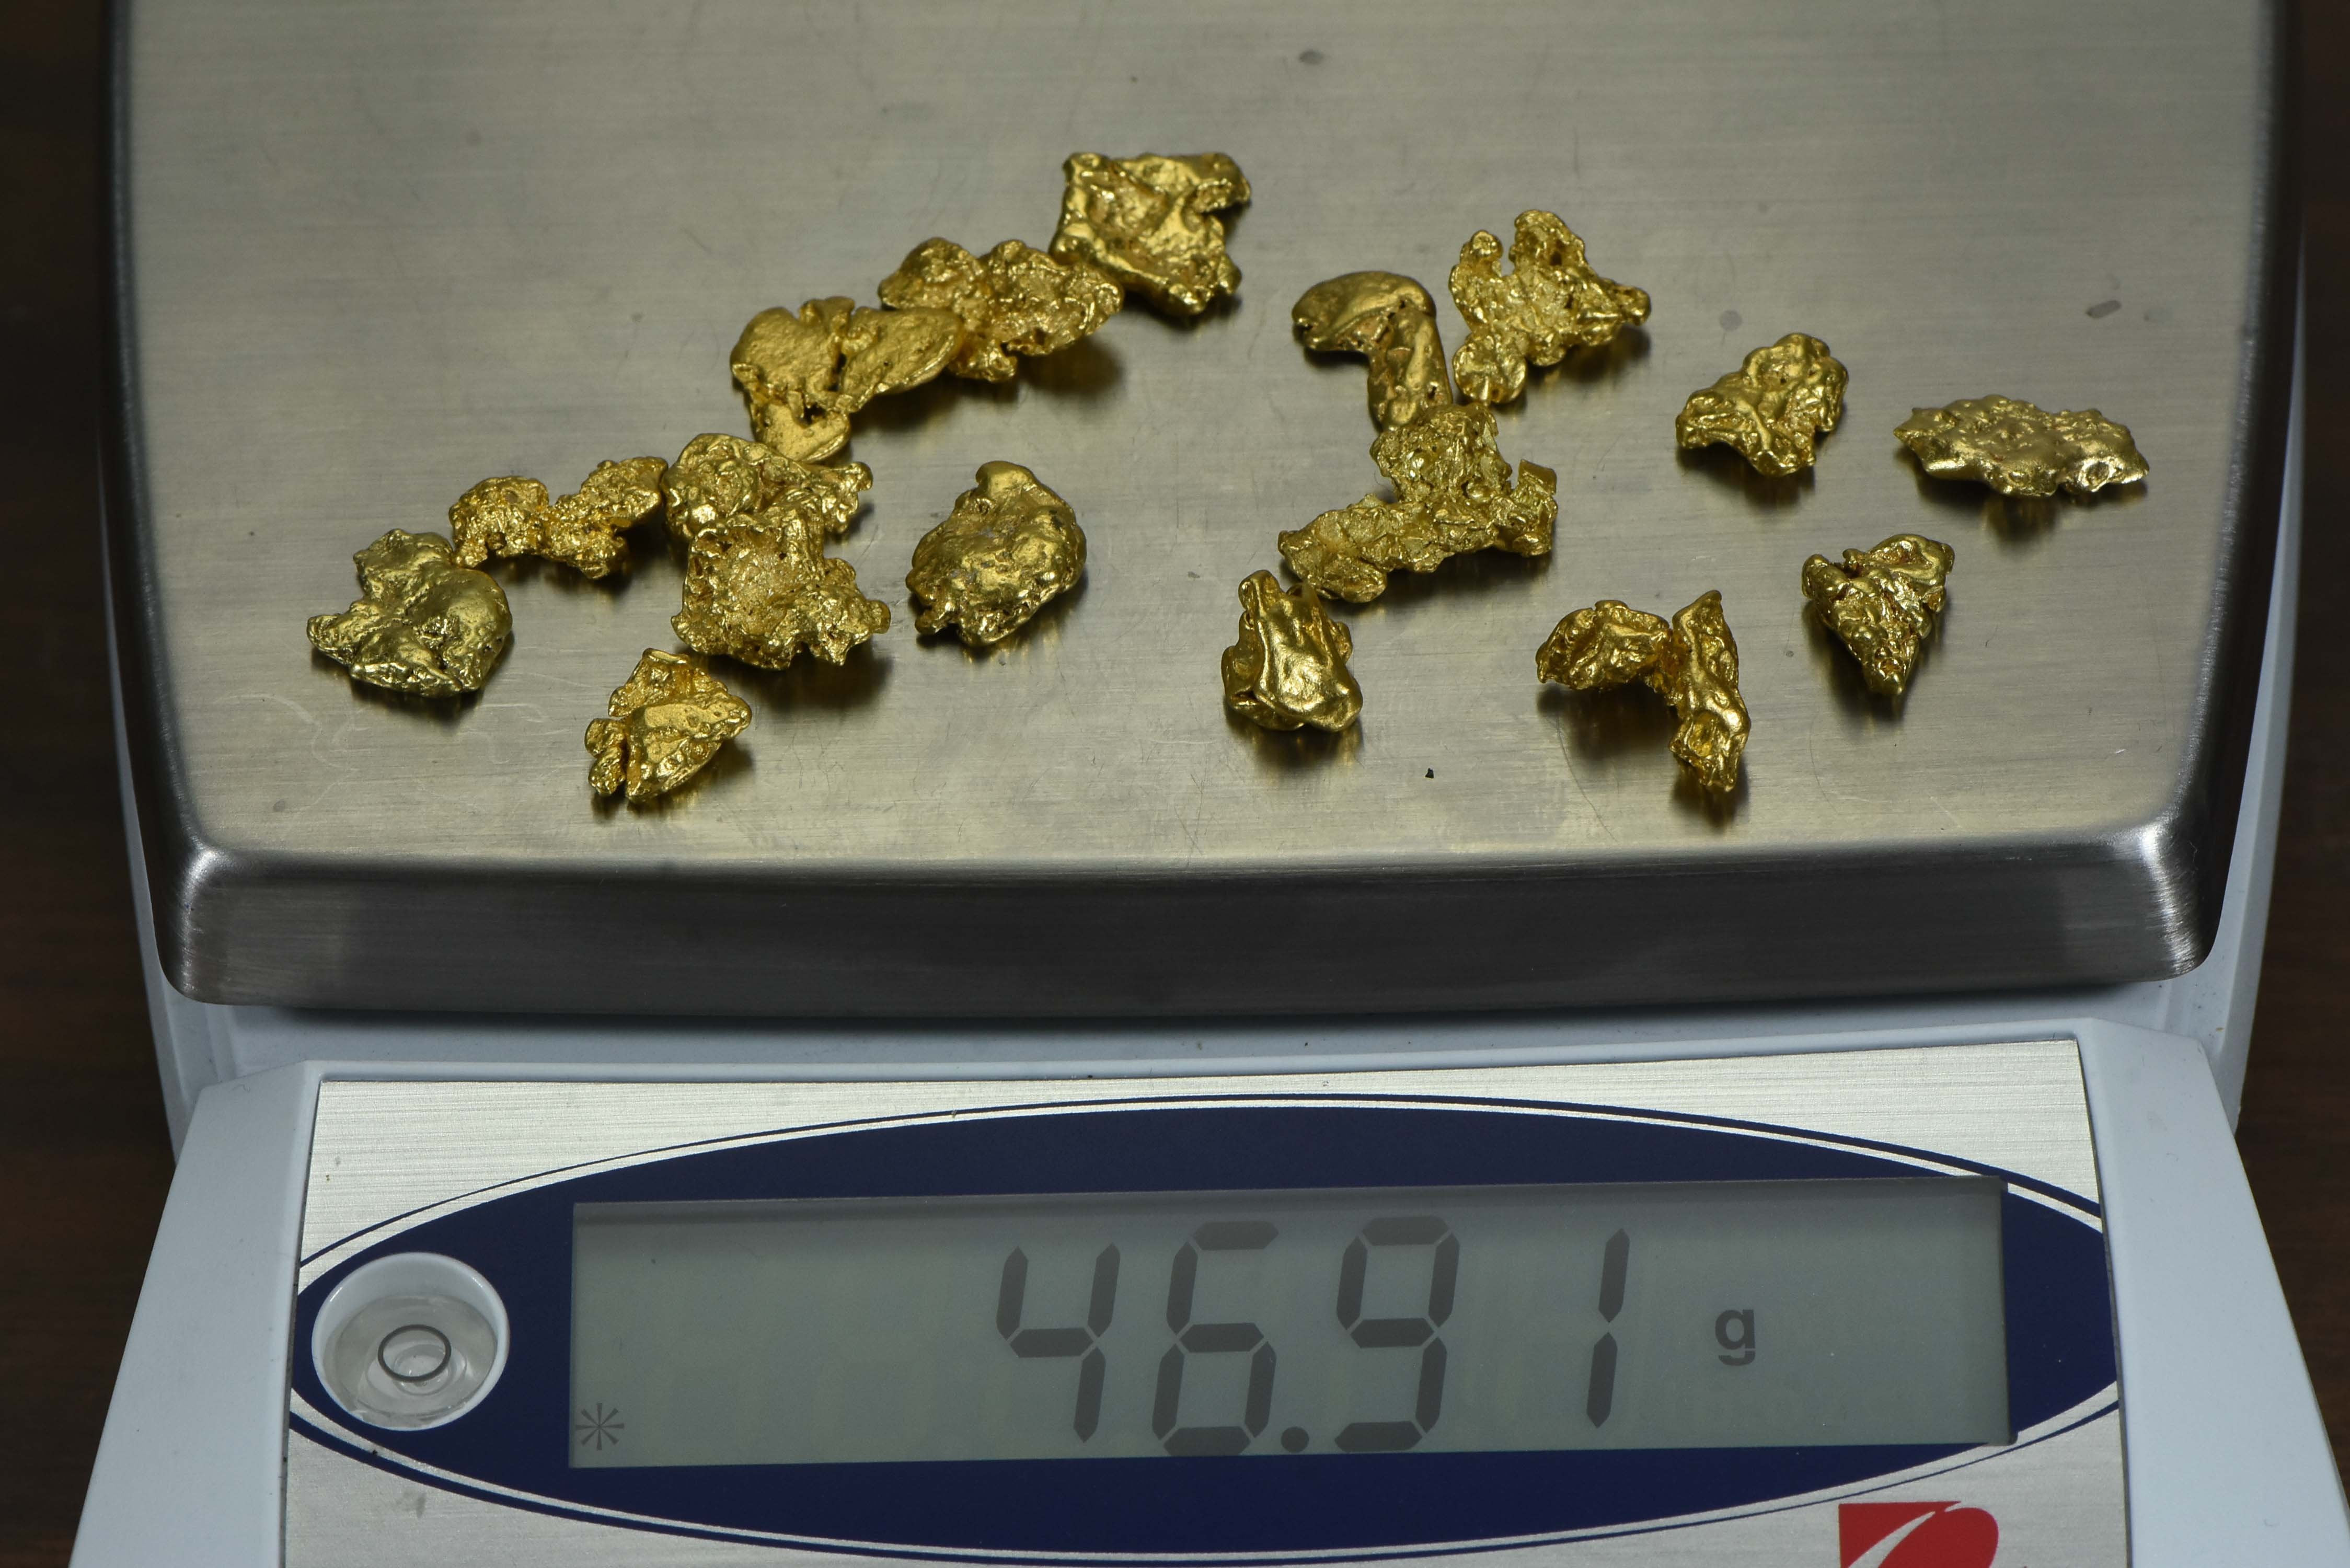 Alaskan Bc Natural Gold Nugget 46.65 Gram Lot Of 2 To 5 Gram Nuggets Genuine 1.5 Troy Oz. Alaska